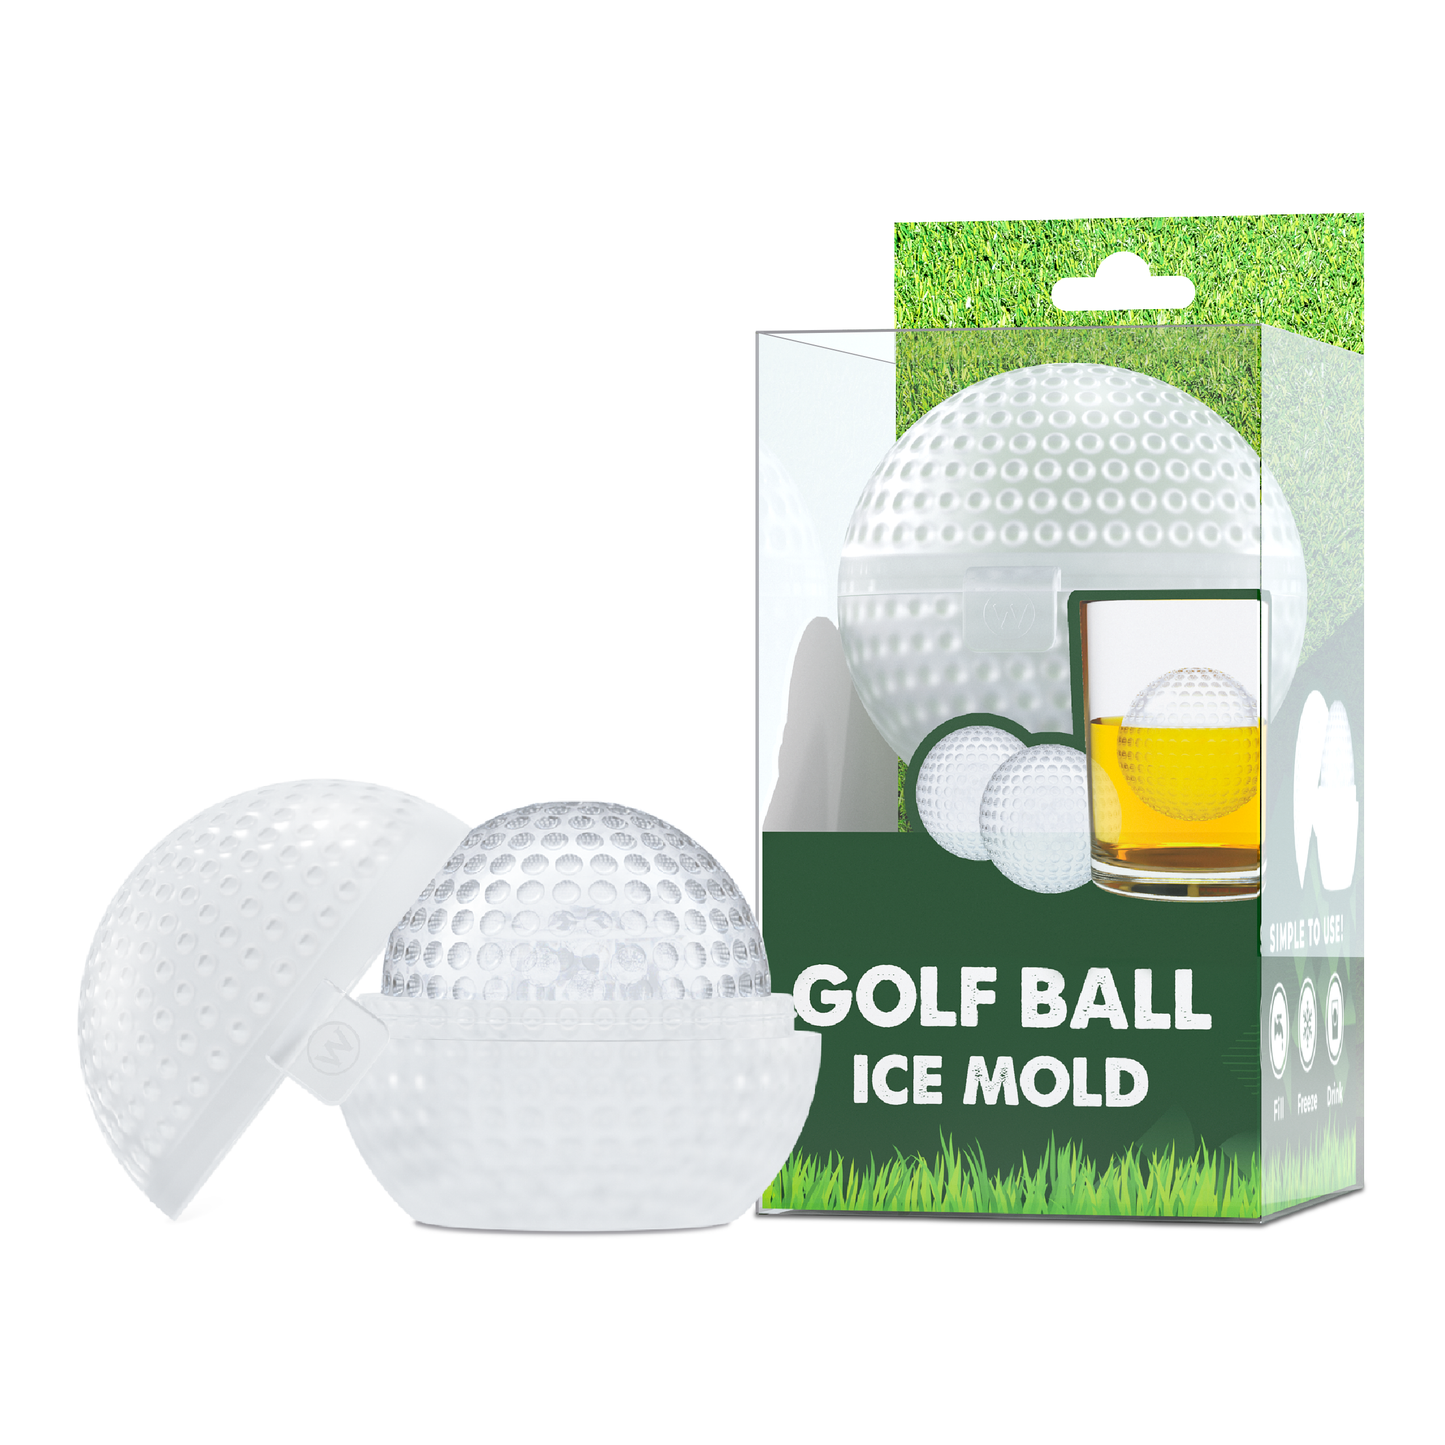 Golf Ball Ice Mold: 2 pack